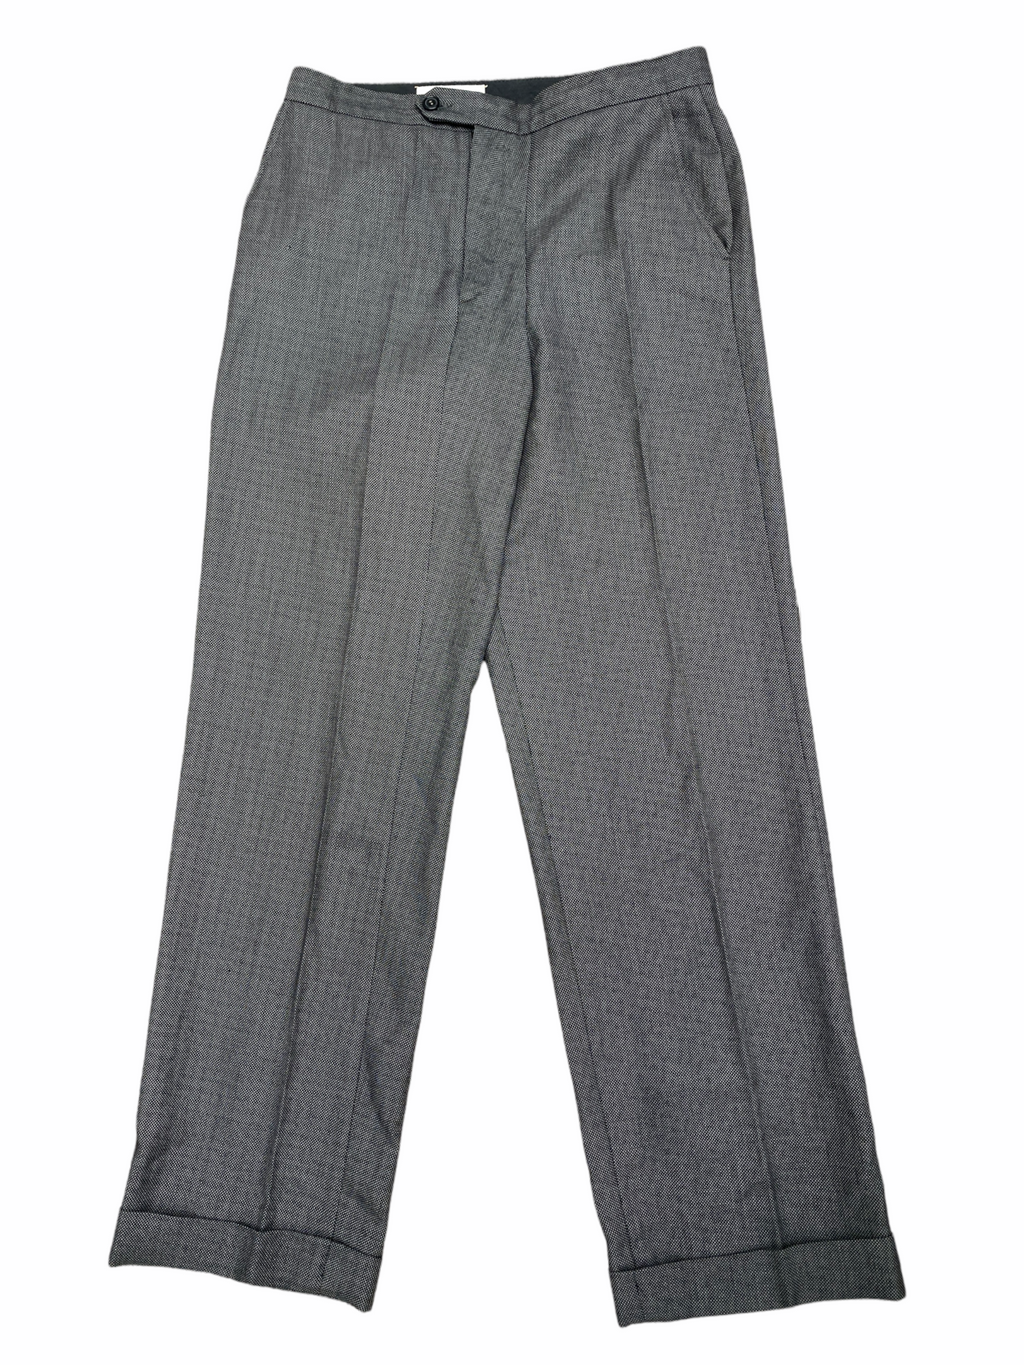 FW 2000 Grey Destructured Pants